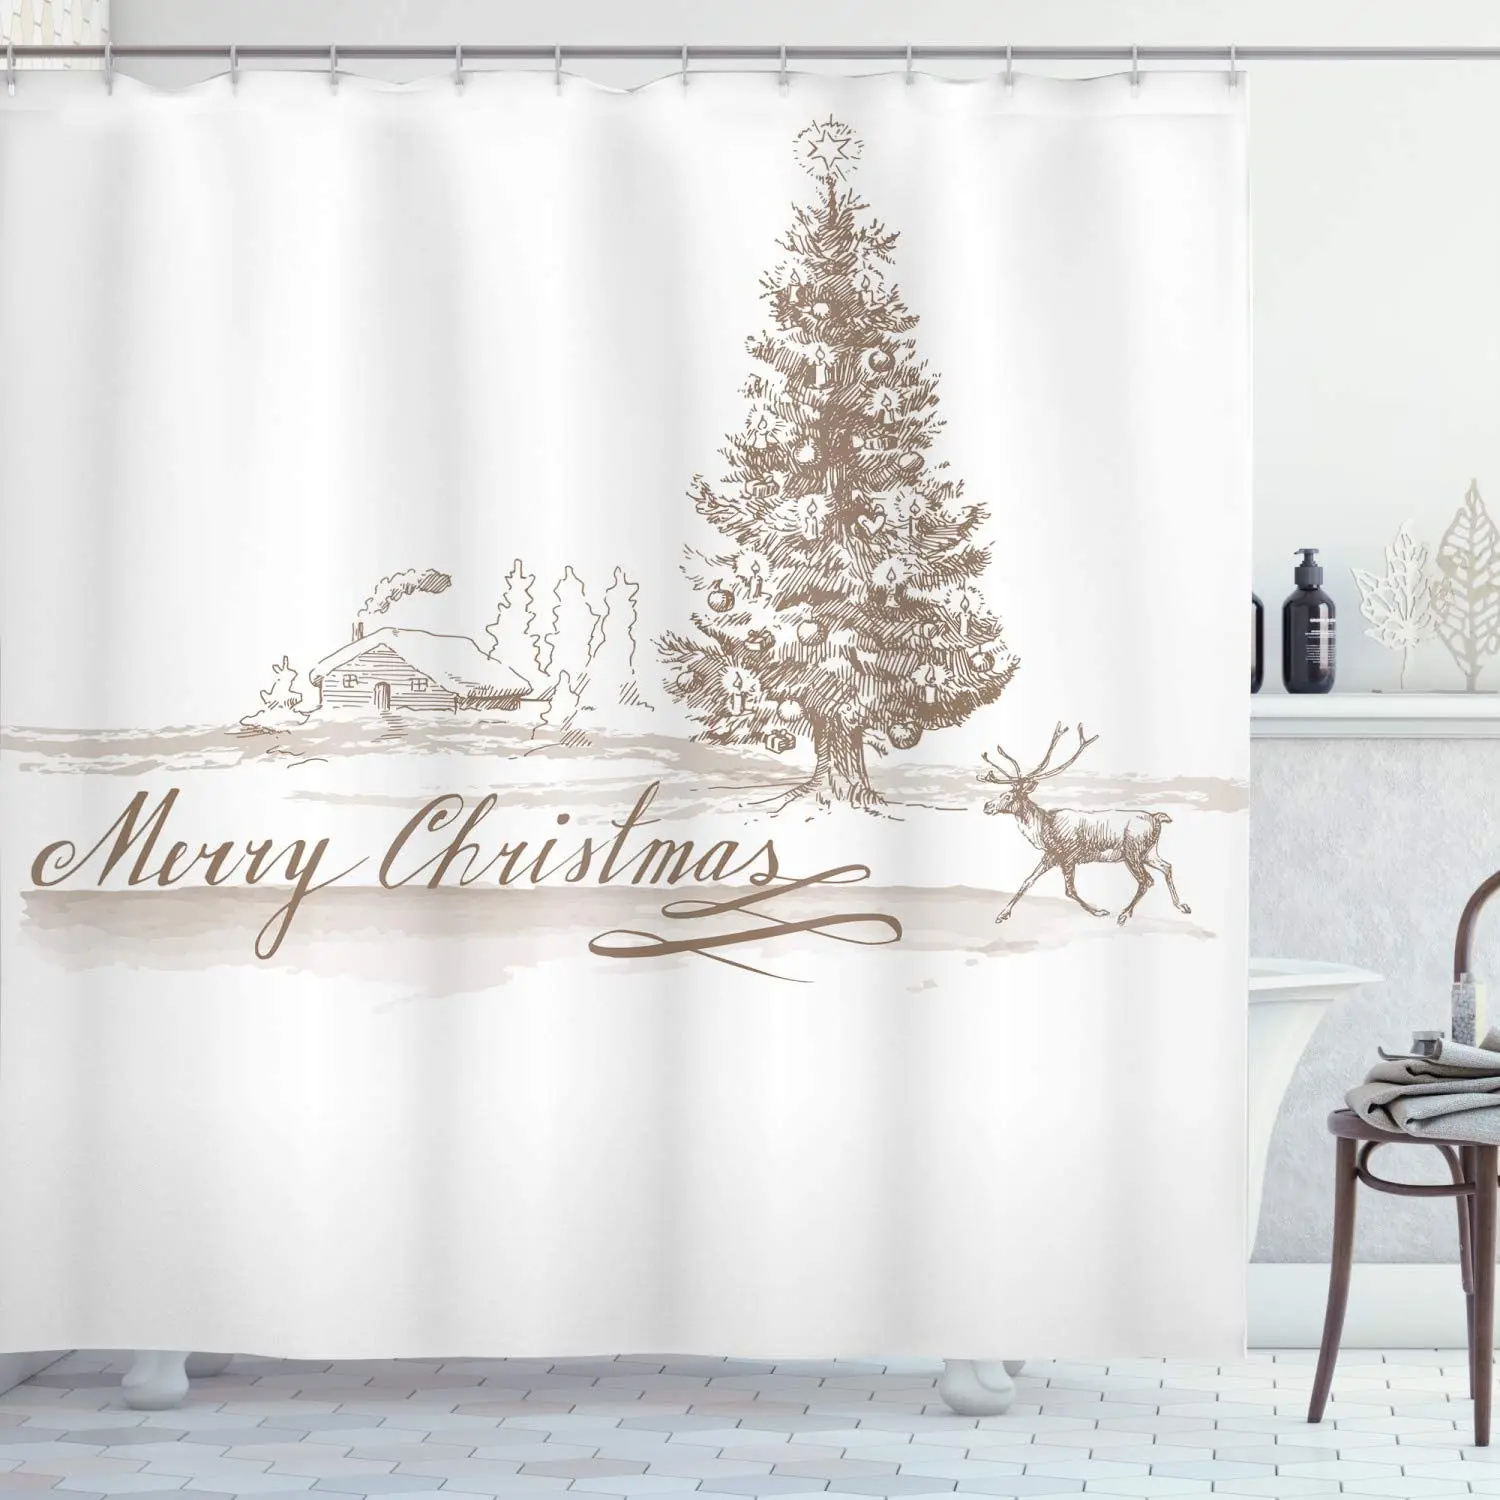 Christmas Shower Curtains Romantic Vintage New Year Scenery Xmas Reindeer Trees Star Design Fabric Bathroom Decor Set with Hooks